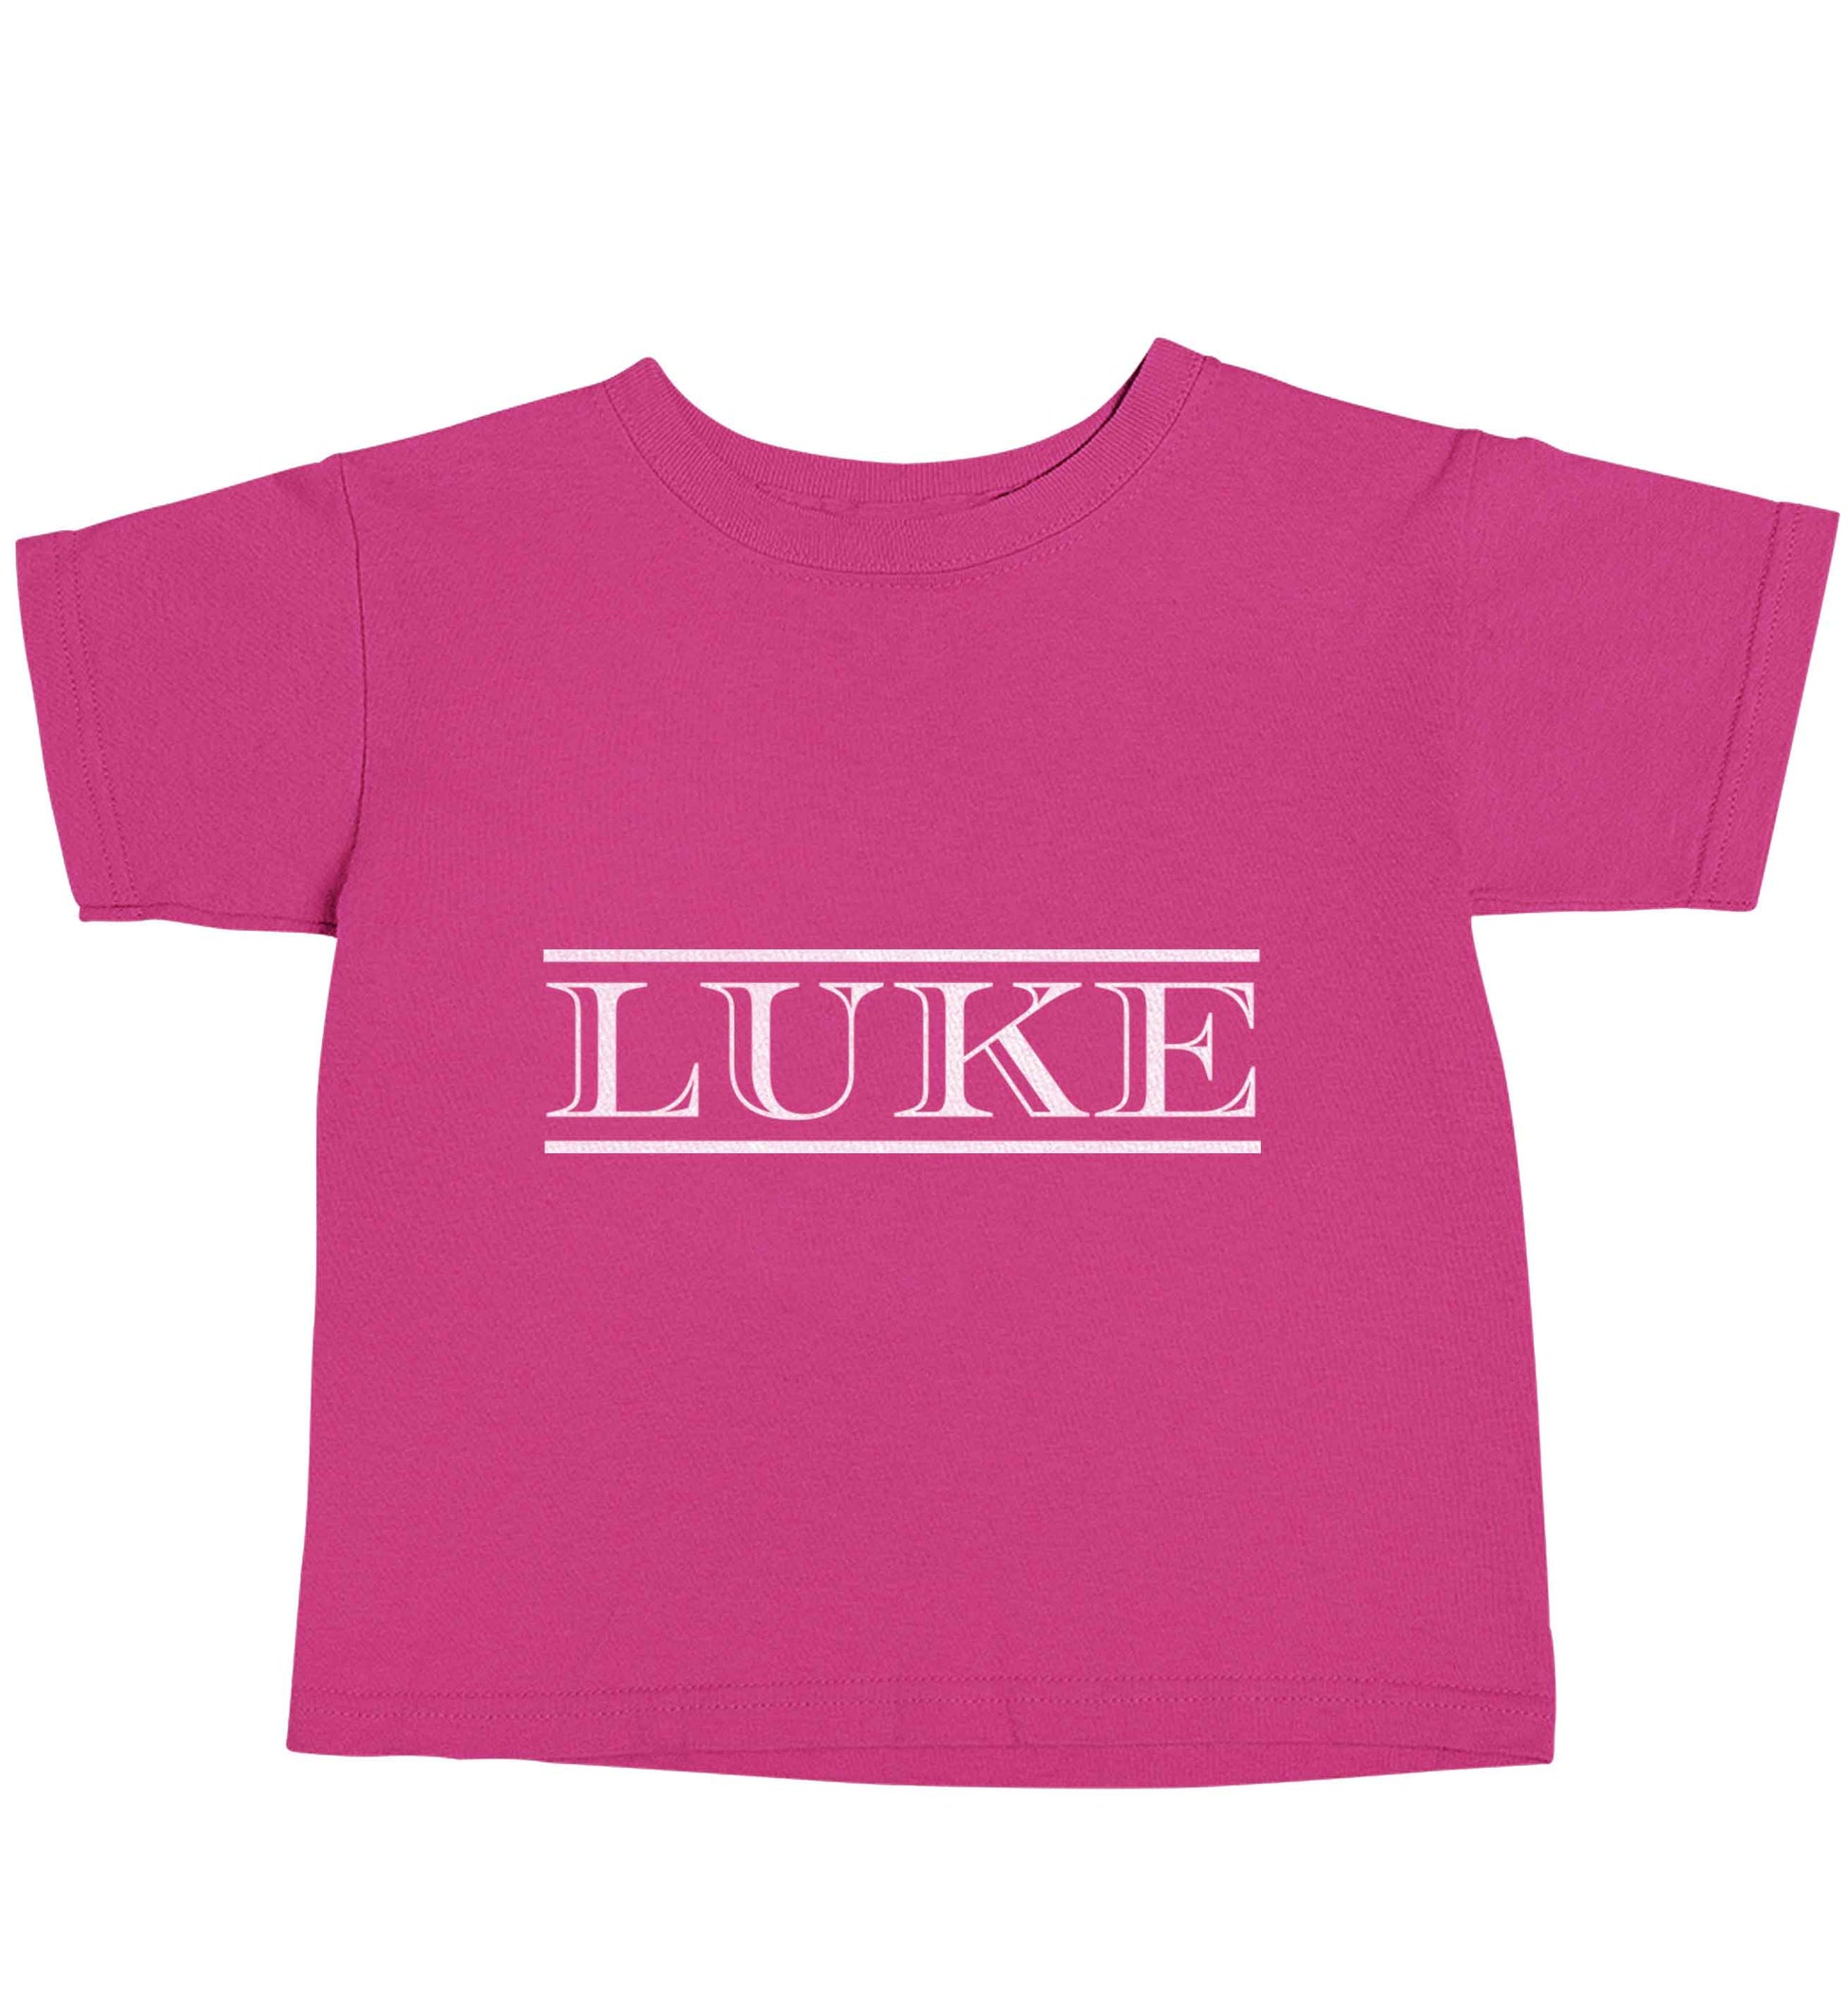 Personalised name pink baby toddler Tshirt 2 Years